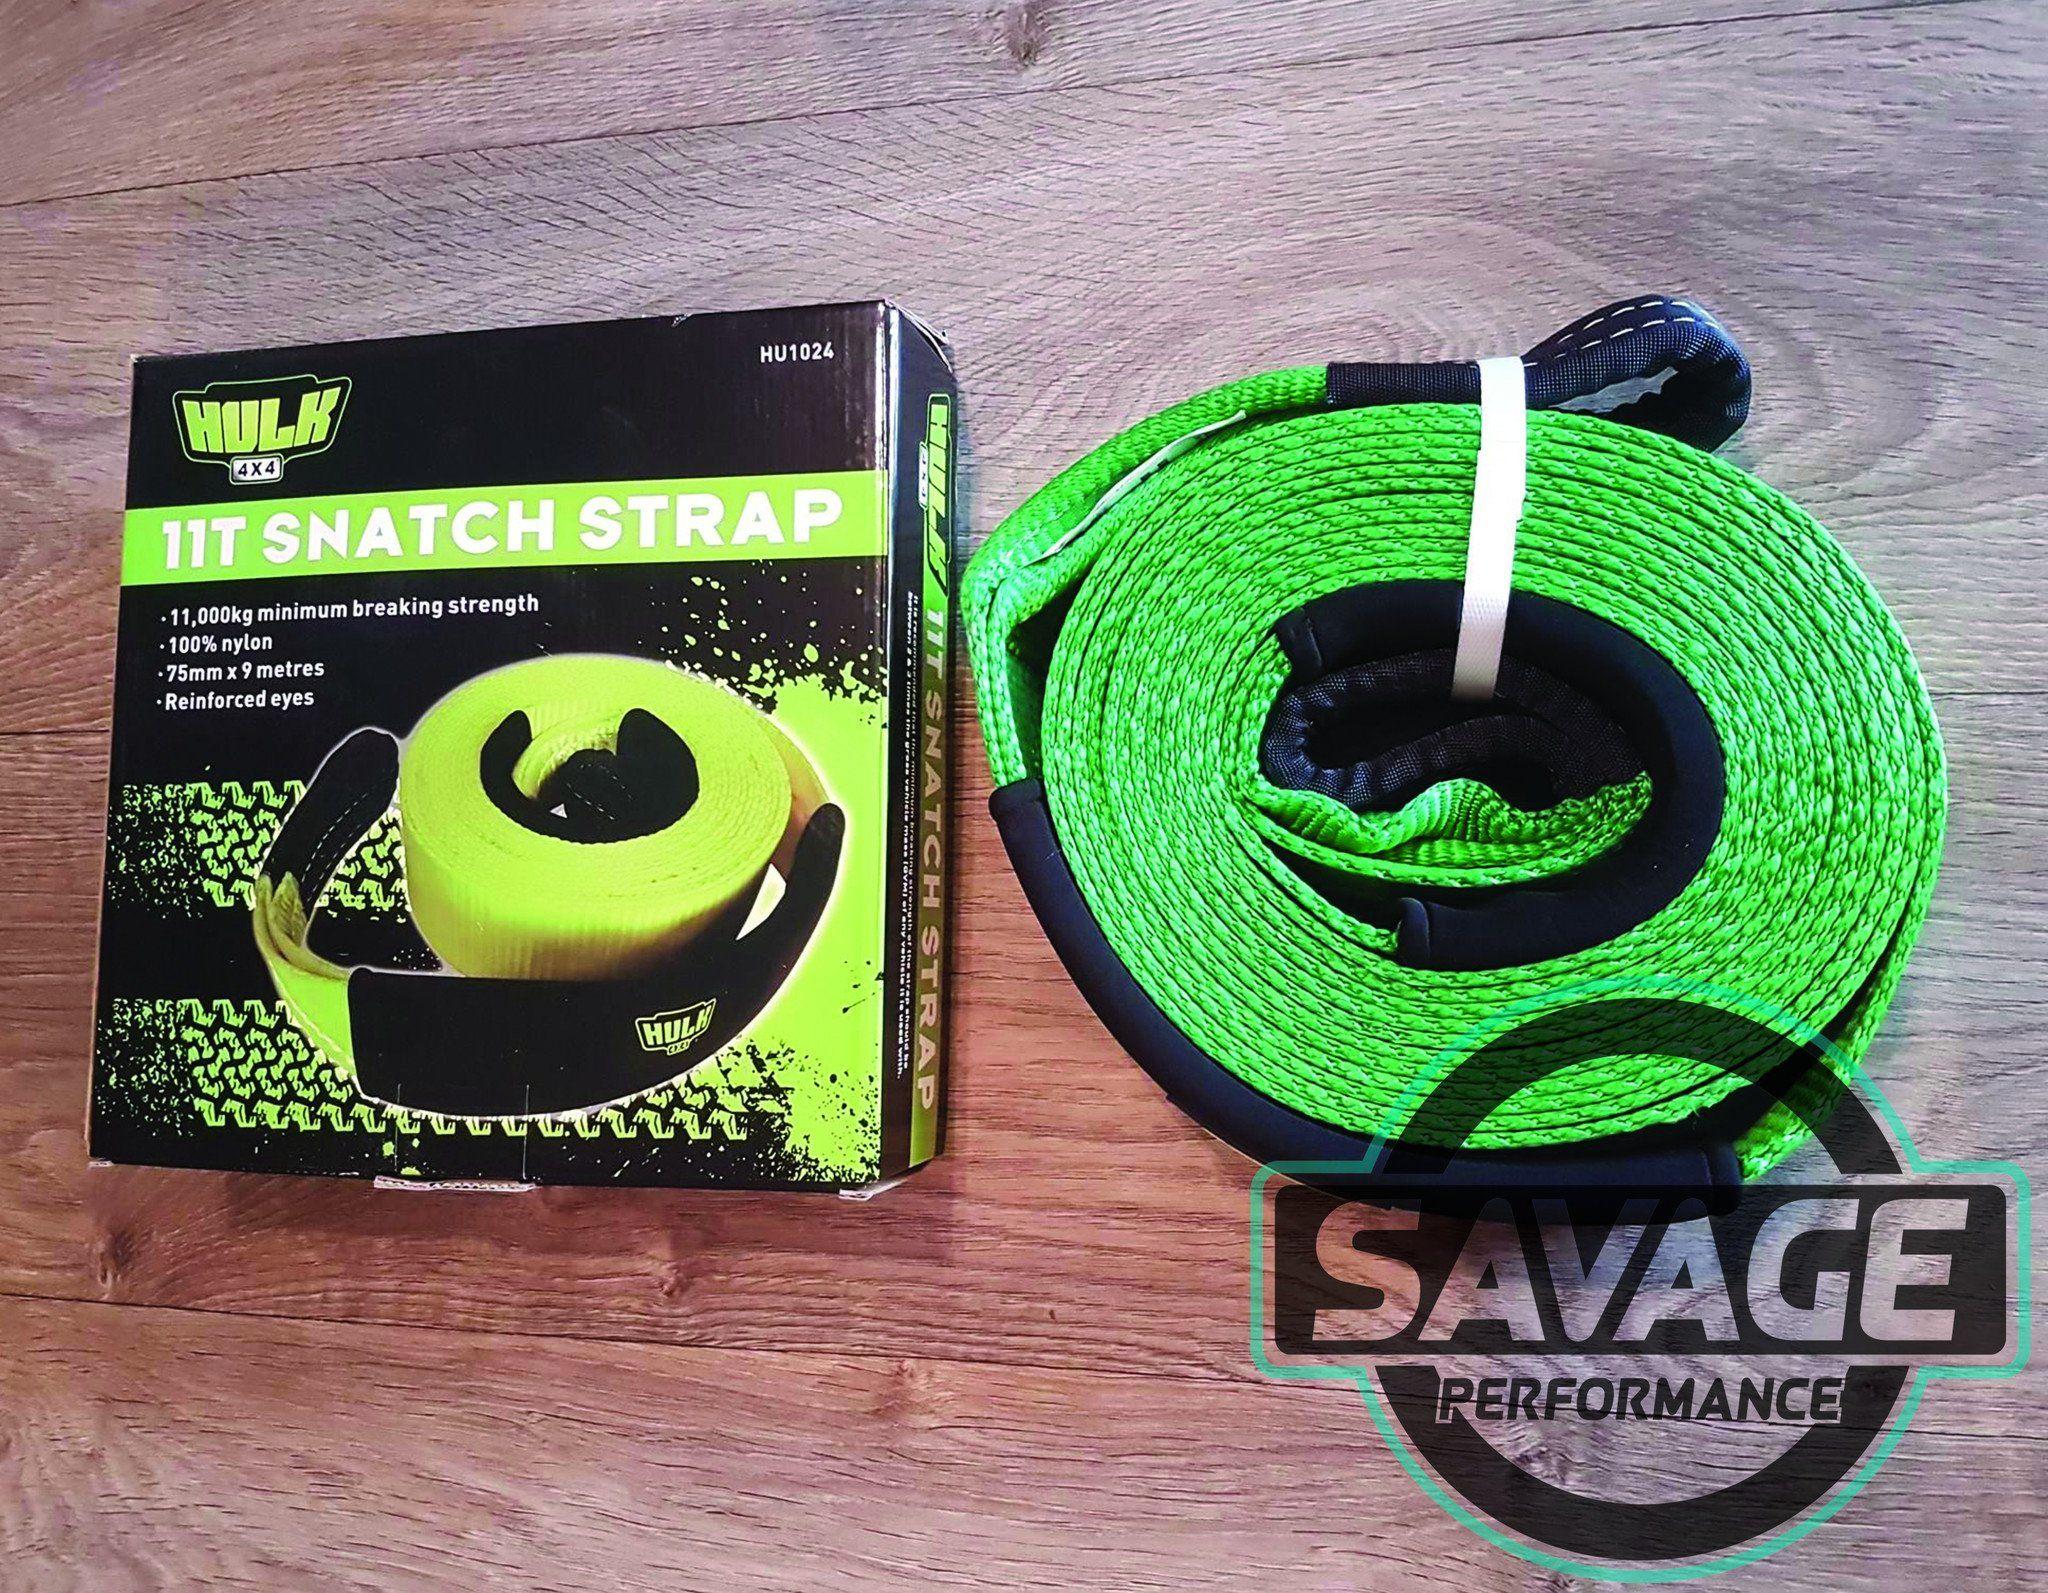 Team Savage Performance Logo - HULK 4x4 11T 000kg Snatch Strap 9m